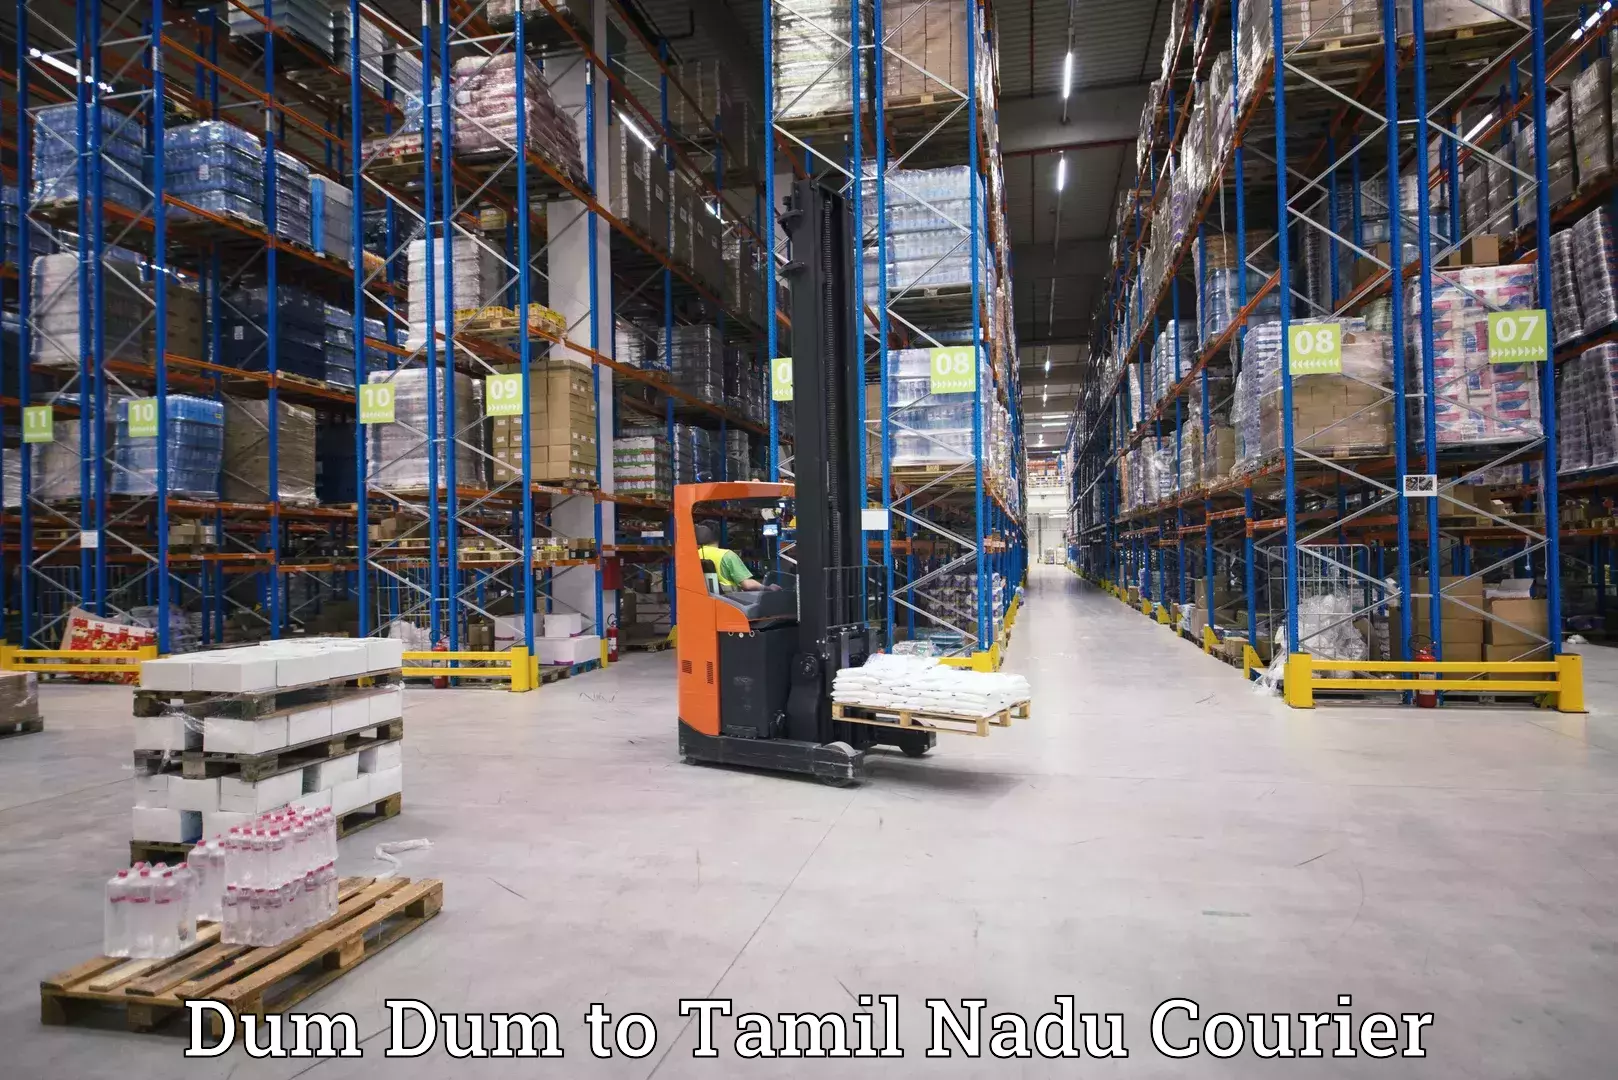 Reliable delivery network Dum Dum to Thiruvadanai